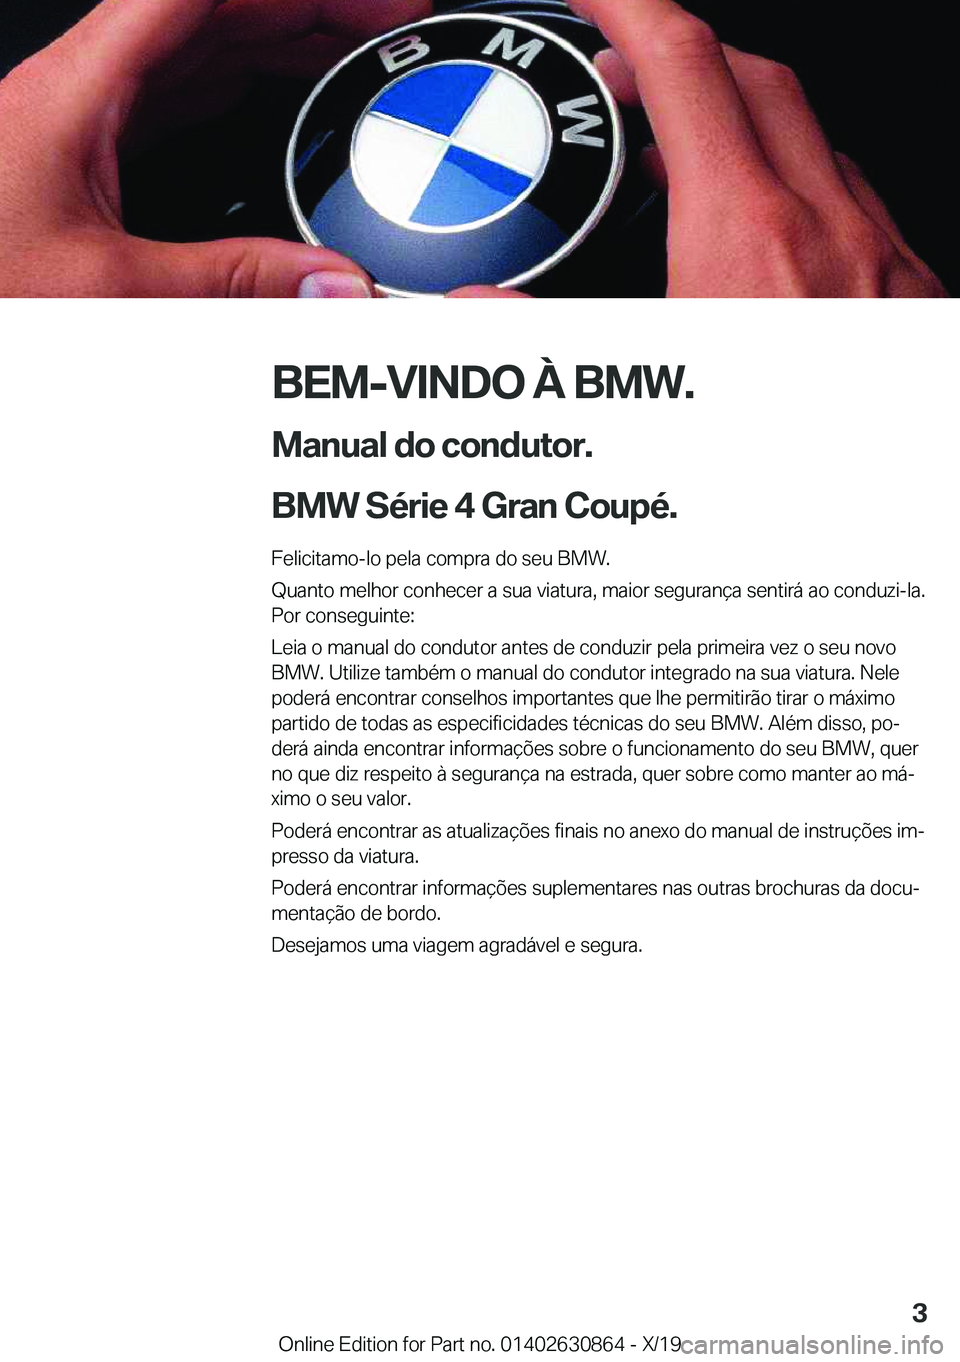 BMW 4 SERIES GRAN COUPE 2020  Manual do condutor (in Portuguese) �B�E�M�-�V�I�N�D�O��À��B�M�W�.
�M�a�n�u�a�l��d�o��c�o�n�d�u�t�o�r�.
�B�M�W��S�é�r�i�e��4��G�r�a�n��C�o�u�p�é�.� �F�e�l�i�c�i�t�a�m�o�-�l�o��p�e�l�a��c�o�m�p�r�a��d�o��s�e�u��B�M�W�.�Q